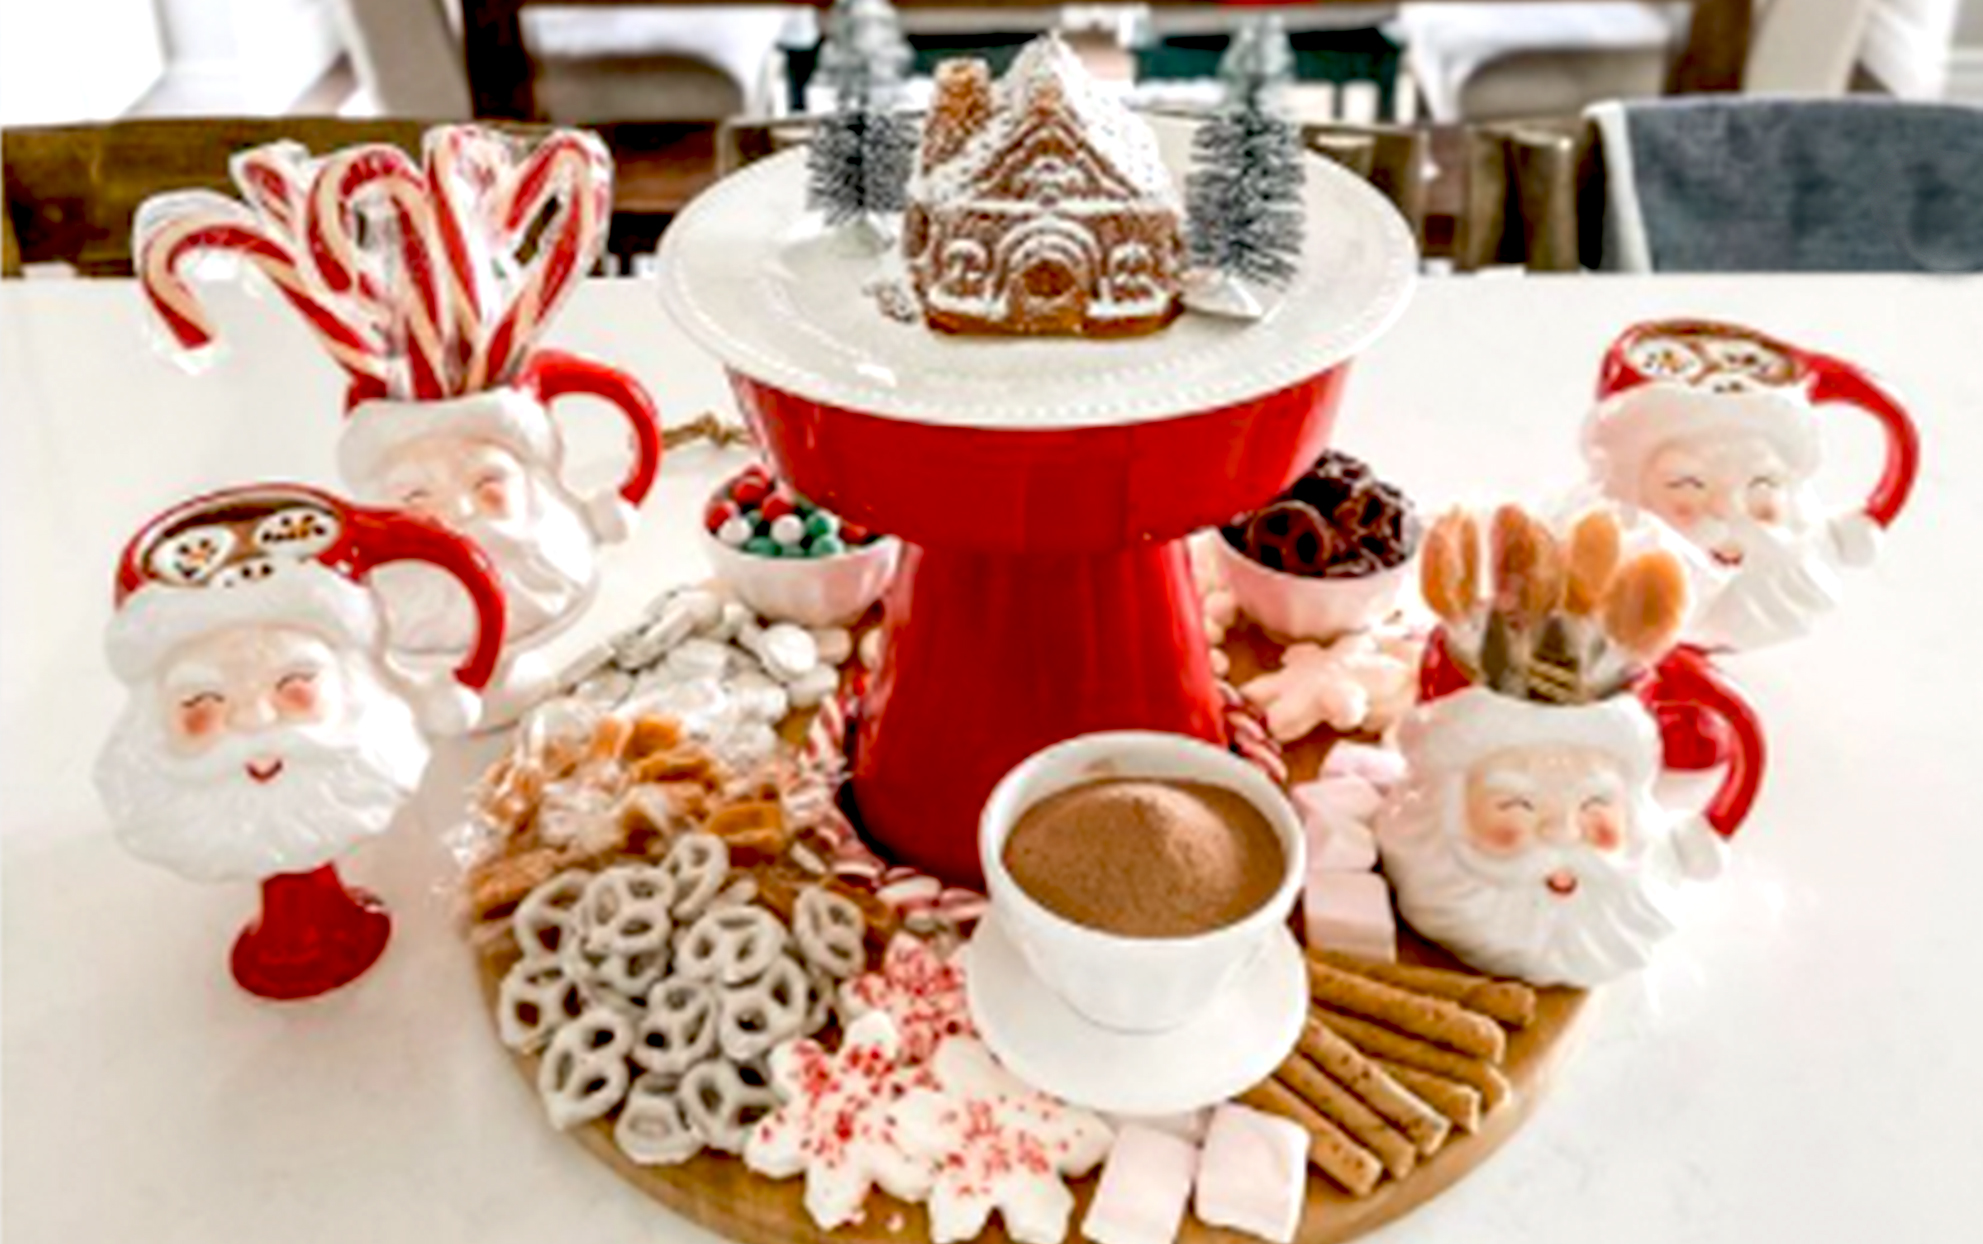 Hot chocolate charcuterie board with Santa mugs